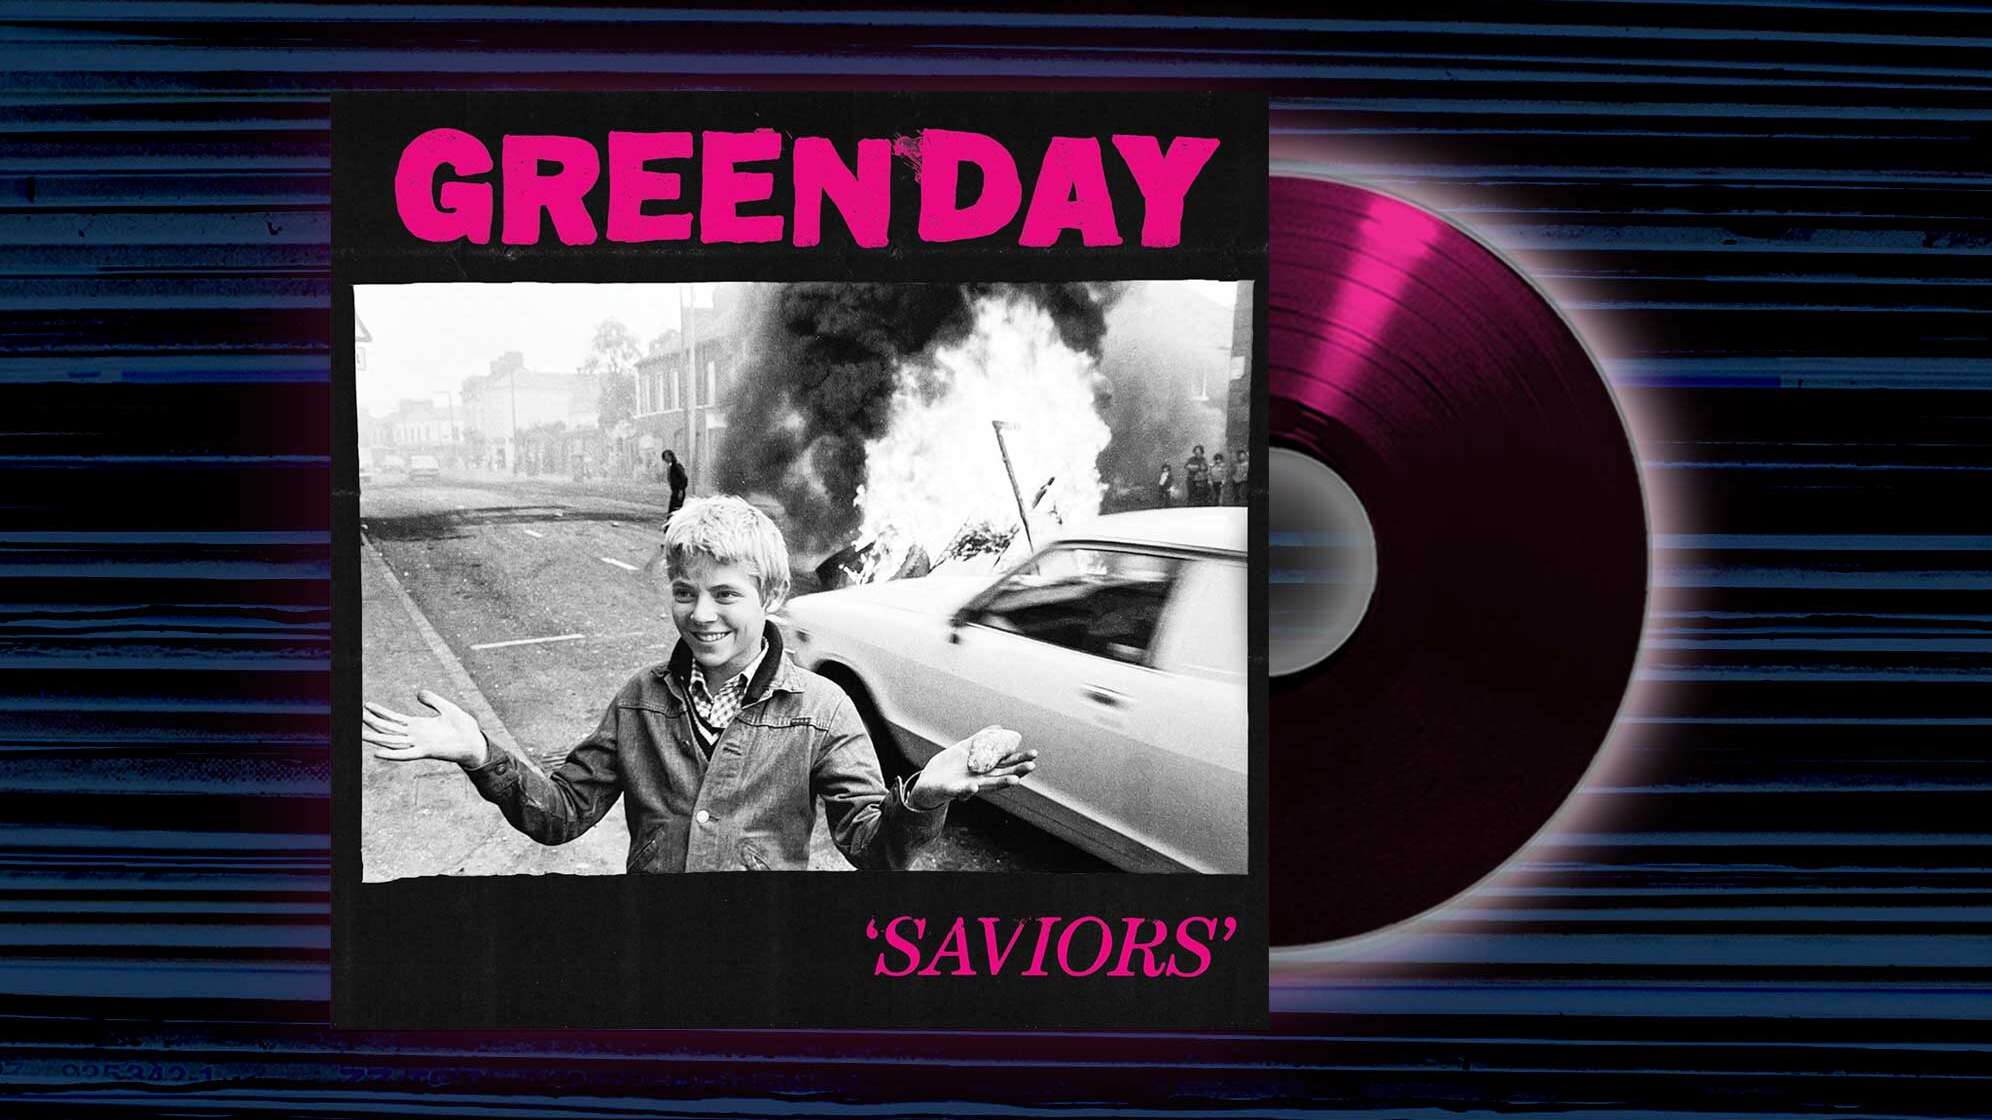 Das Albumcover von Green Day - "Saviors"